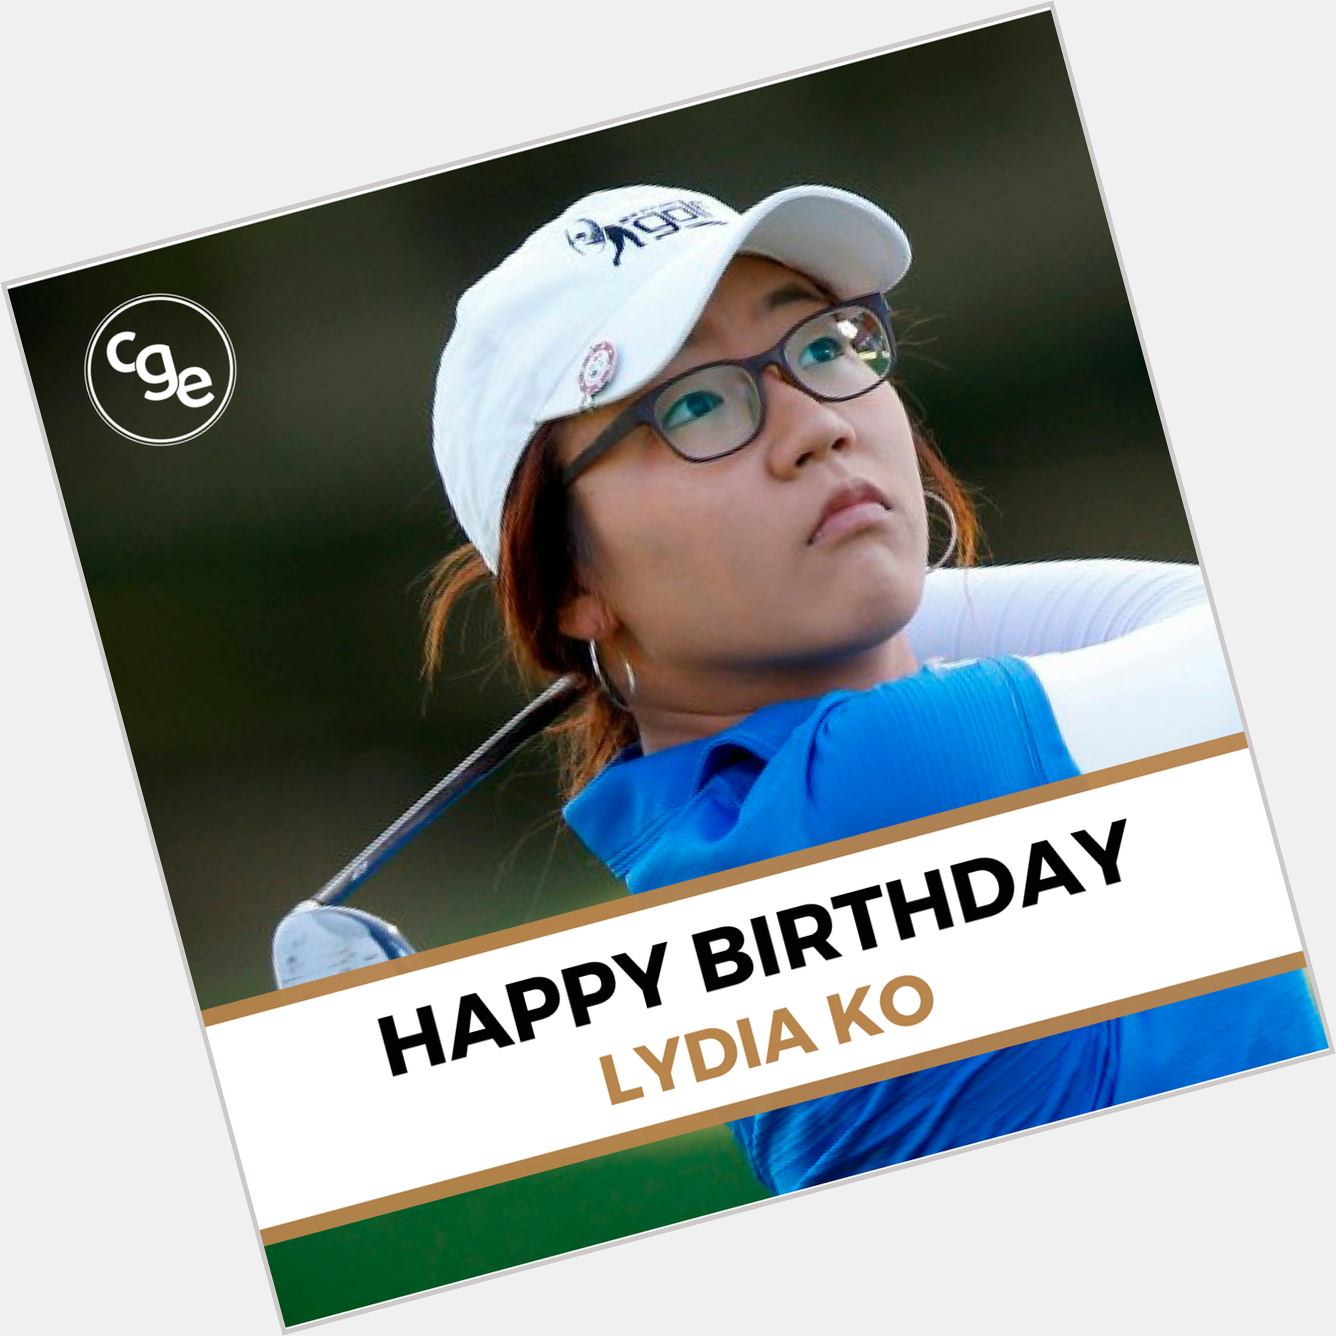 Happy Birthday to Lydia Ko Lydia began playing golf at age 5!   